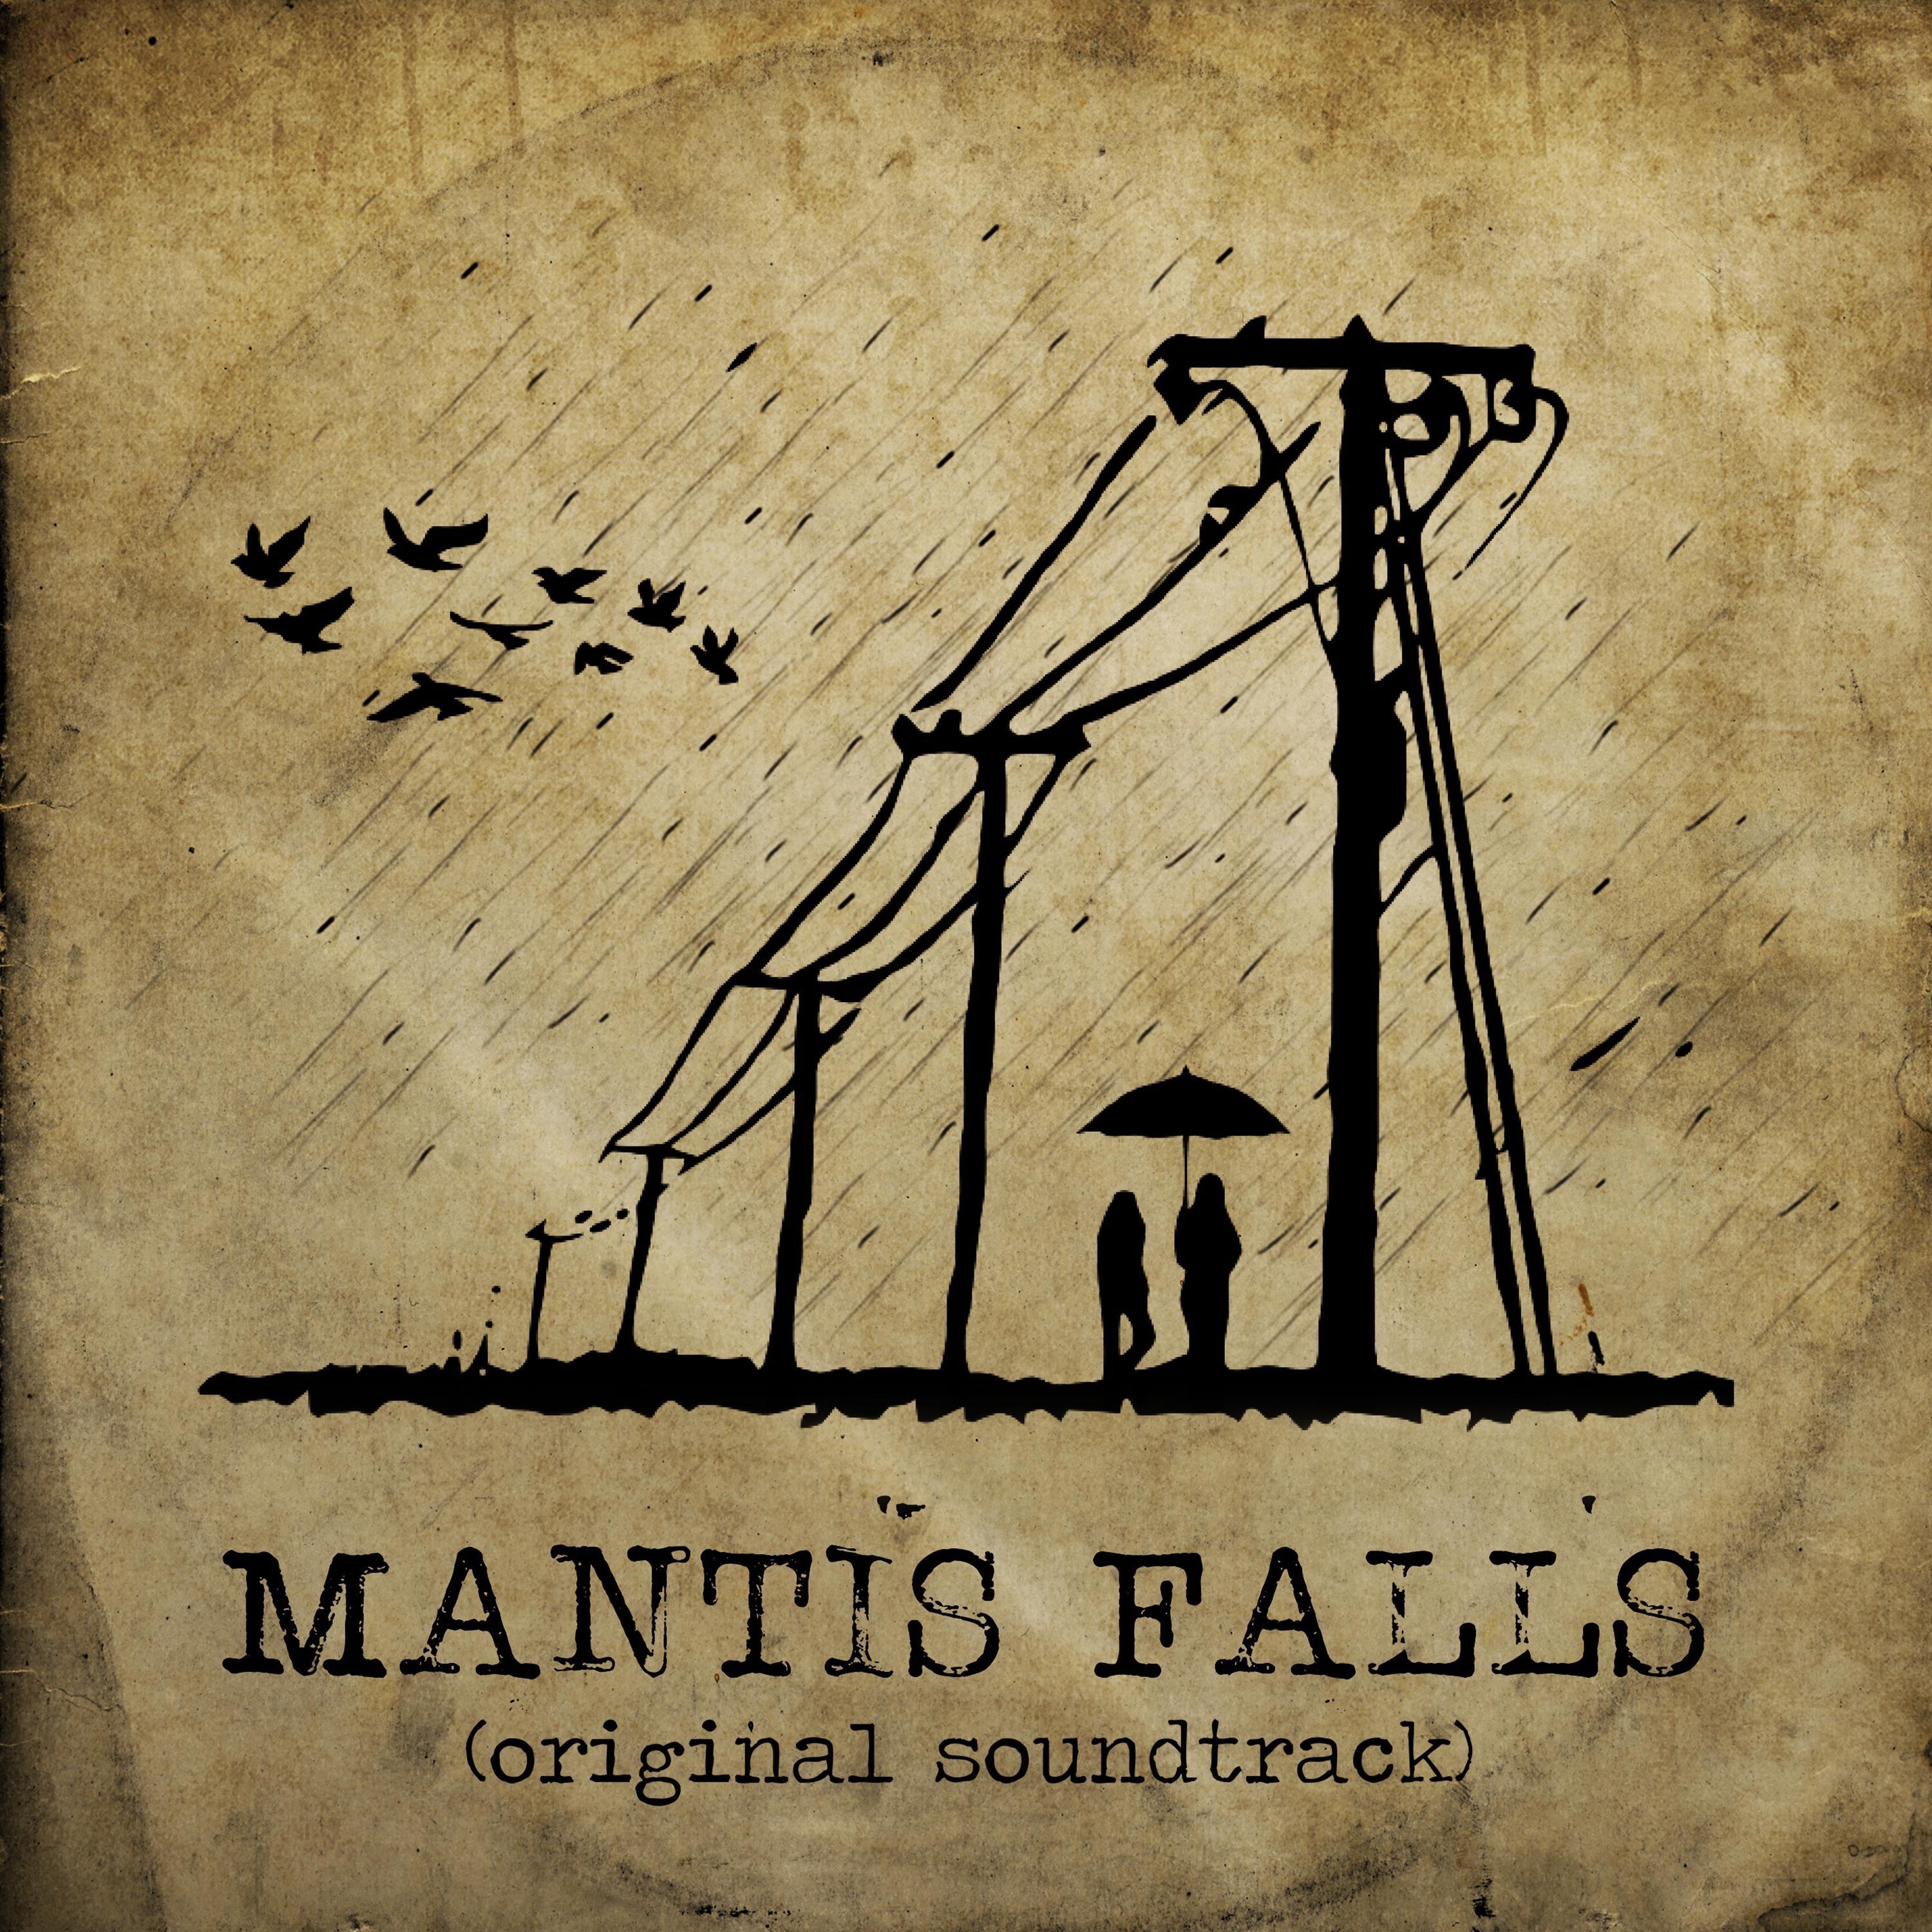 Mantis Soundtrack. Blue Mantis Soundtrack. Graffiti Falls OST Soundtrack. Ost fall